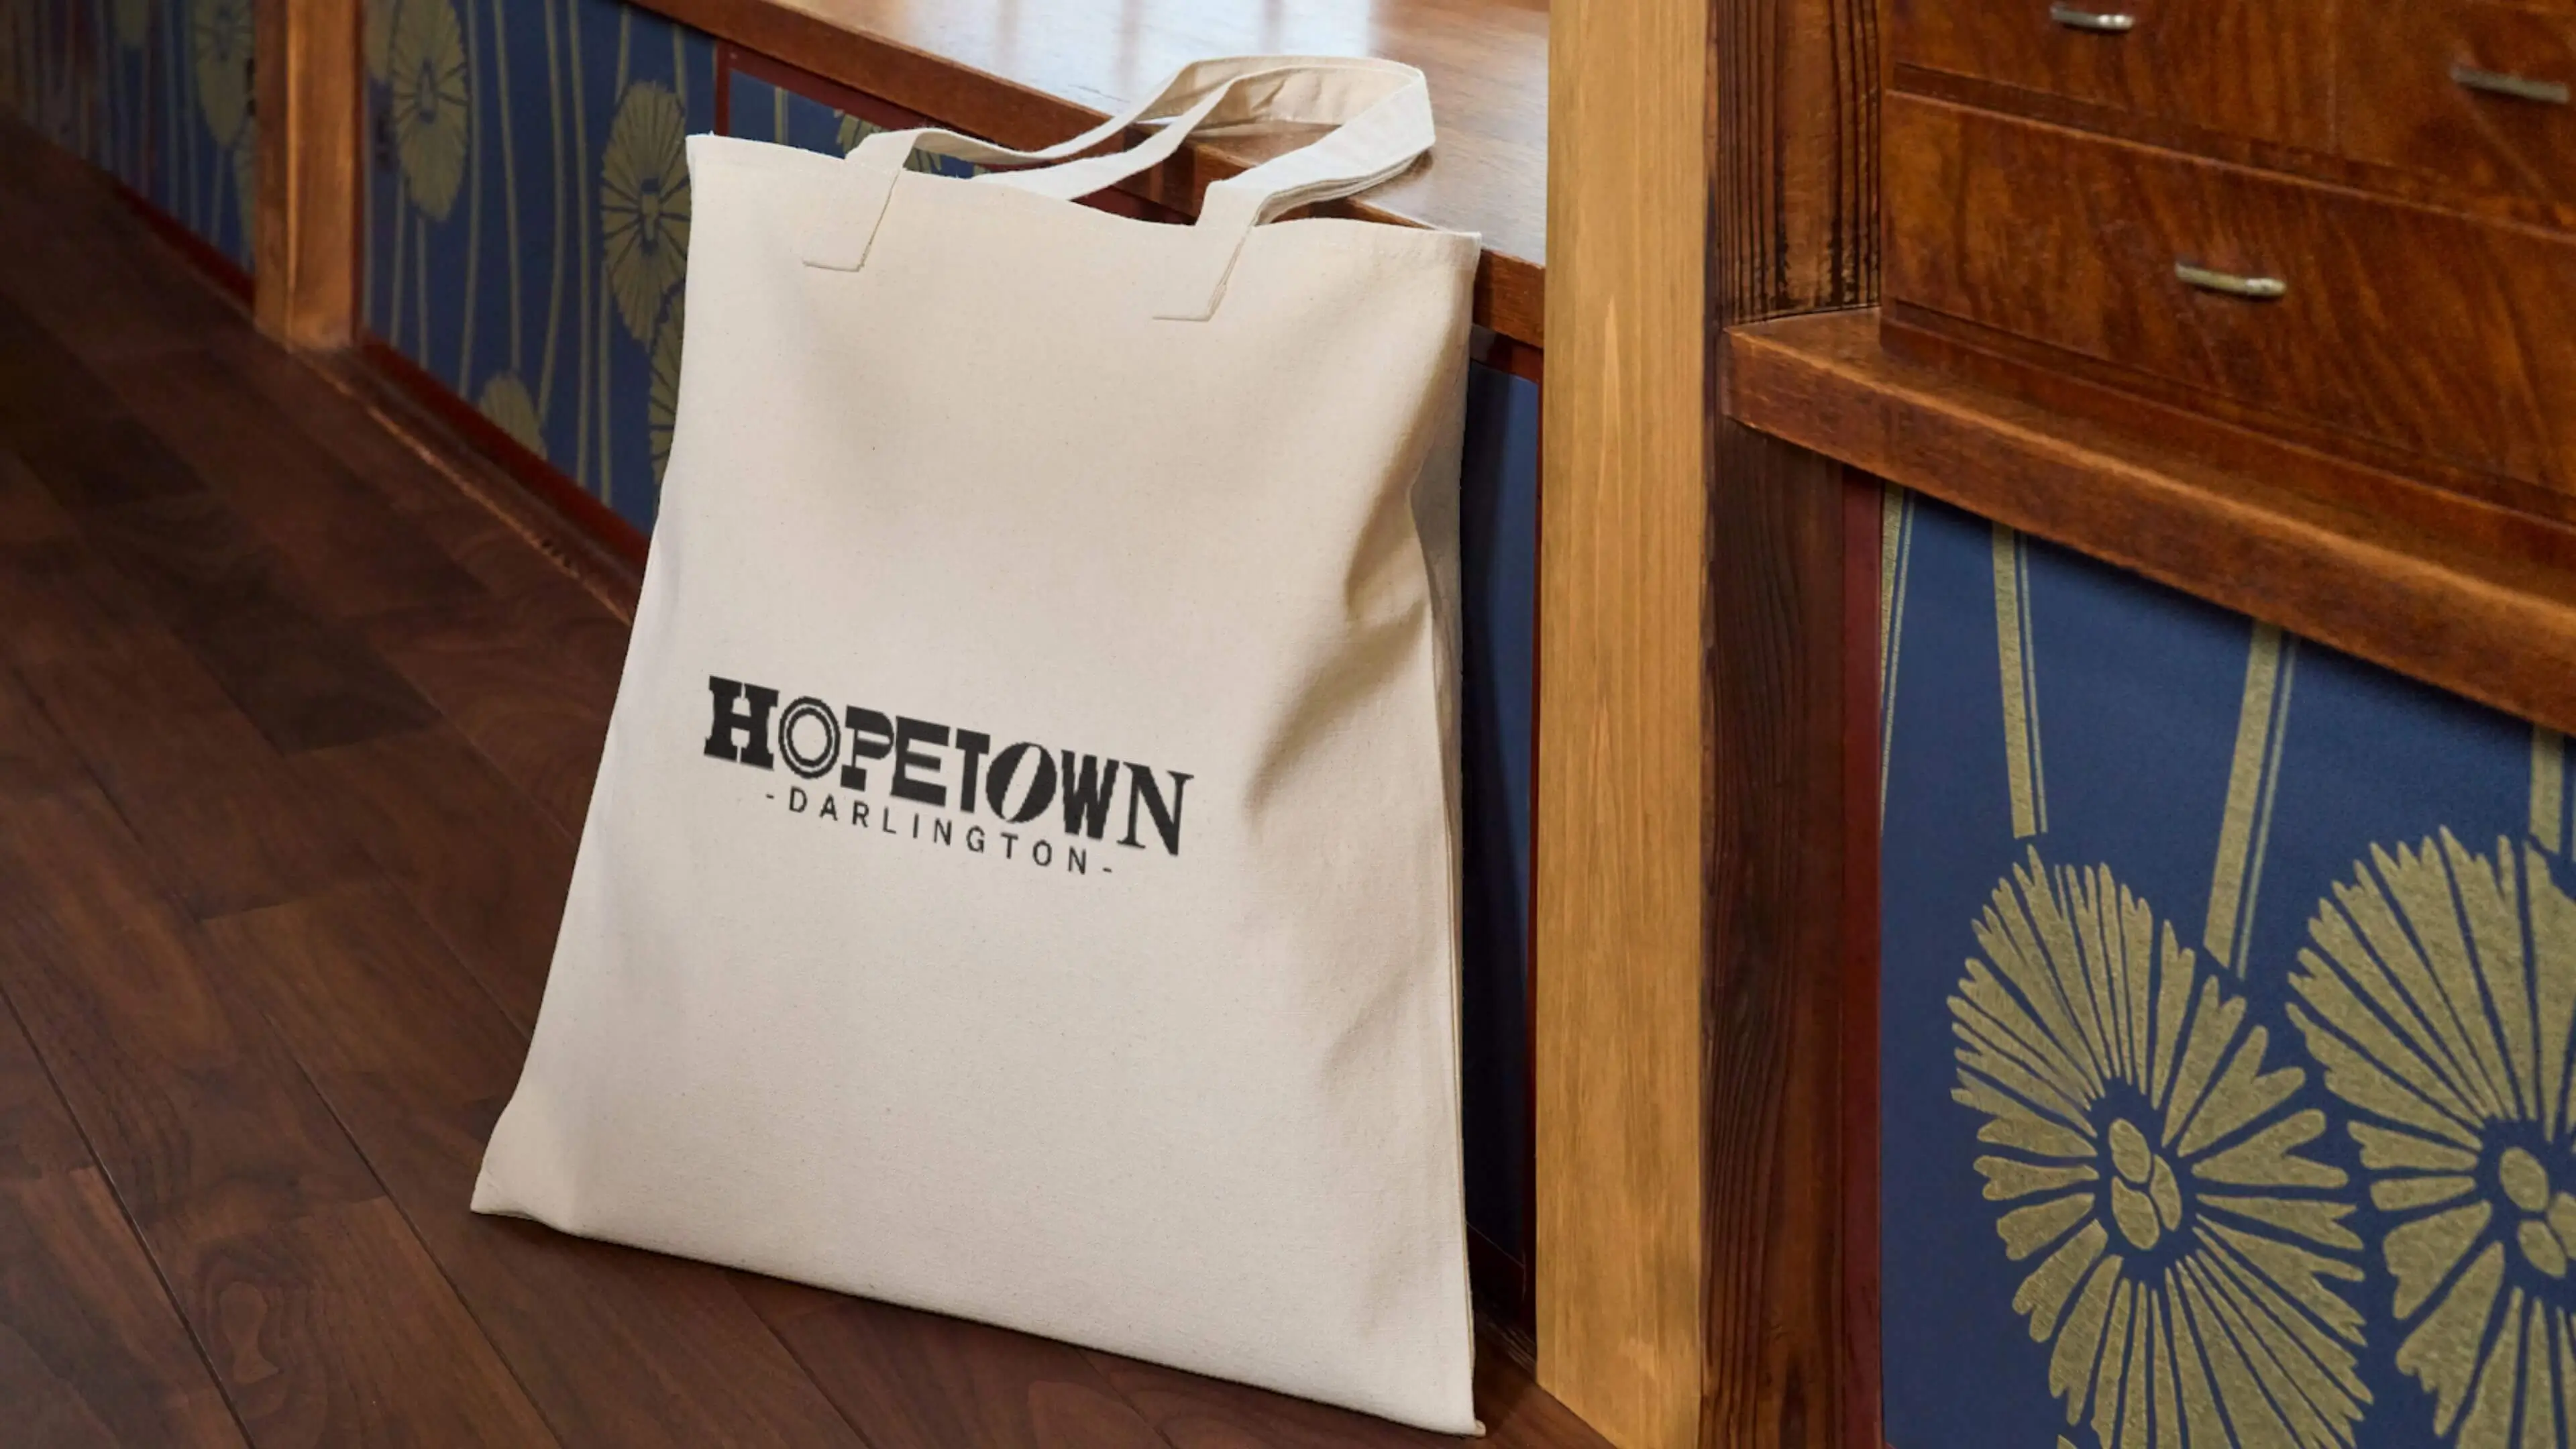 Tote bag with Hopetown Darlington logo